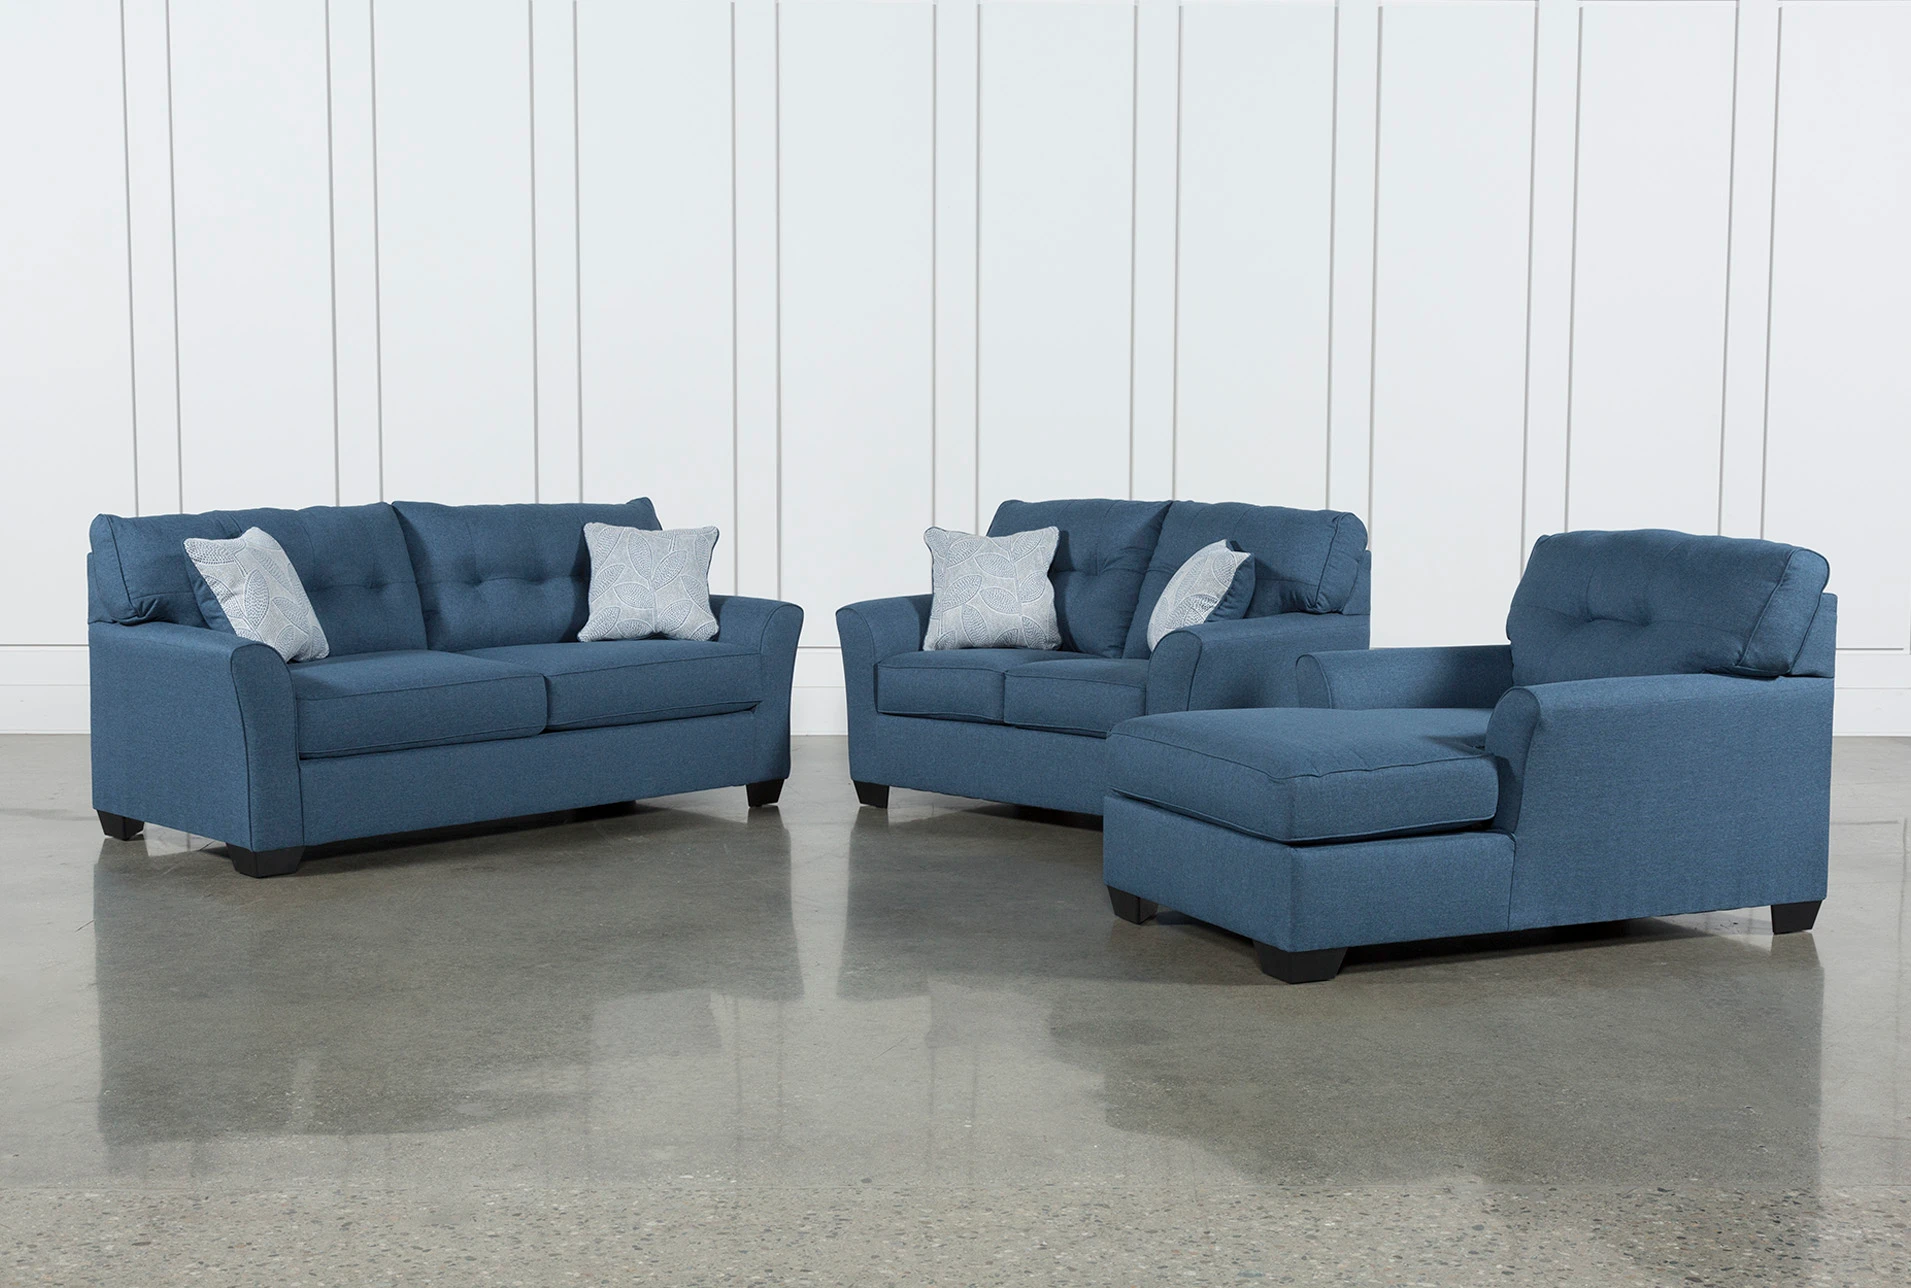 Jacoby Denim 3 Piece Living Room Set, Blue Jean Sleeper Sofa